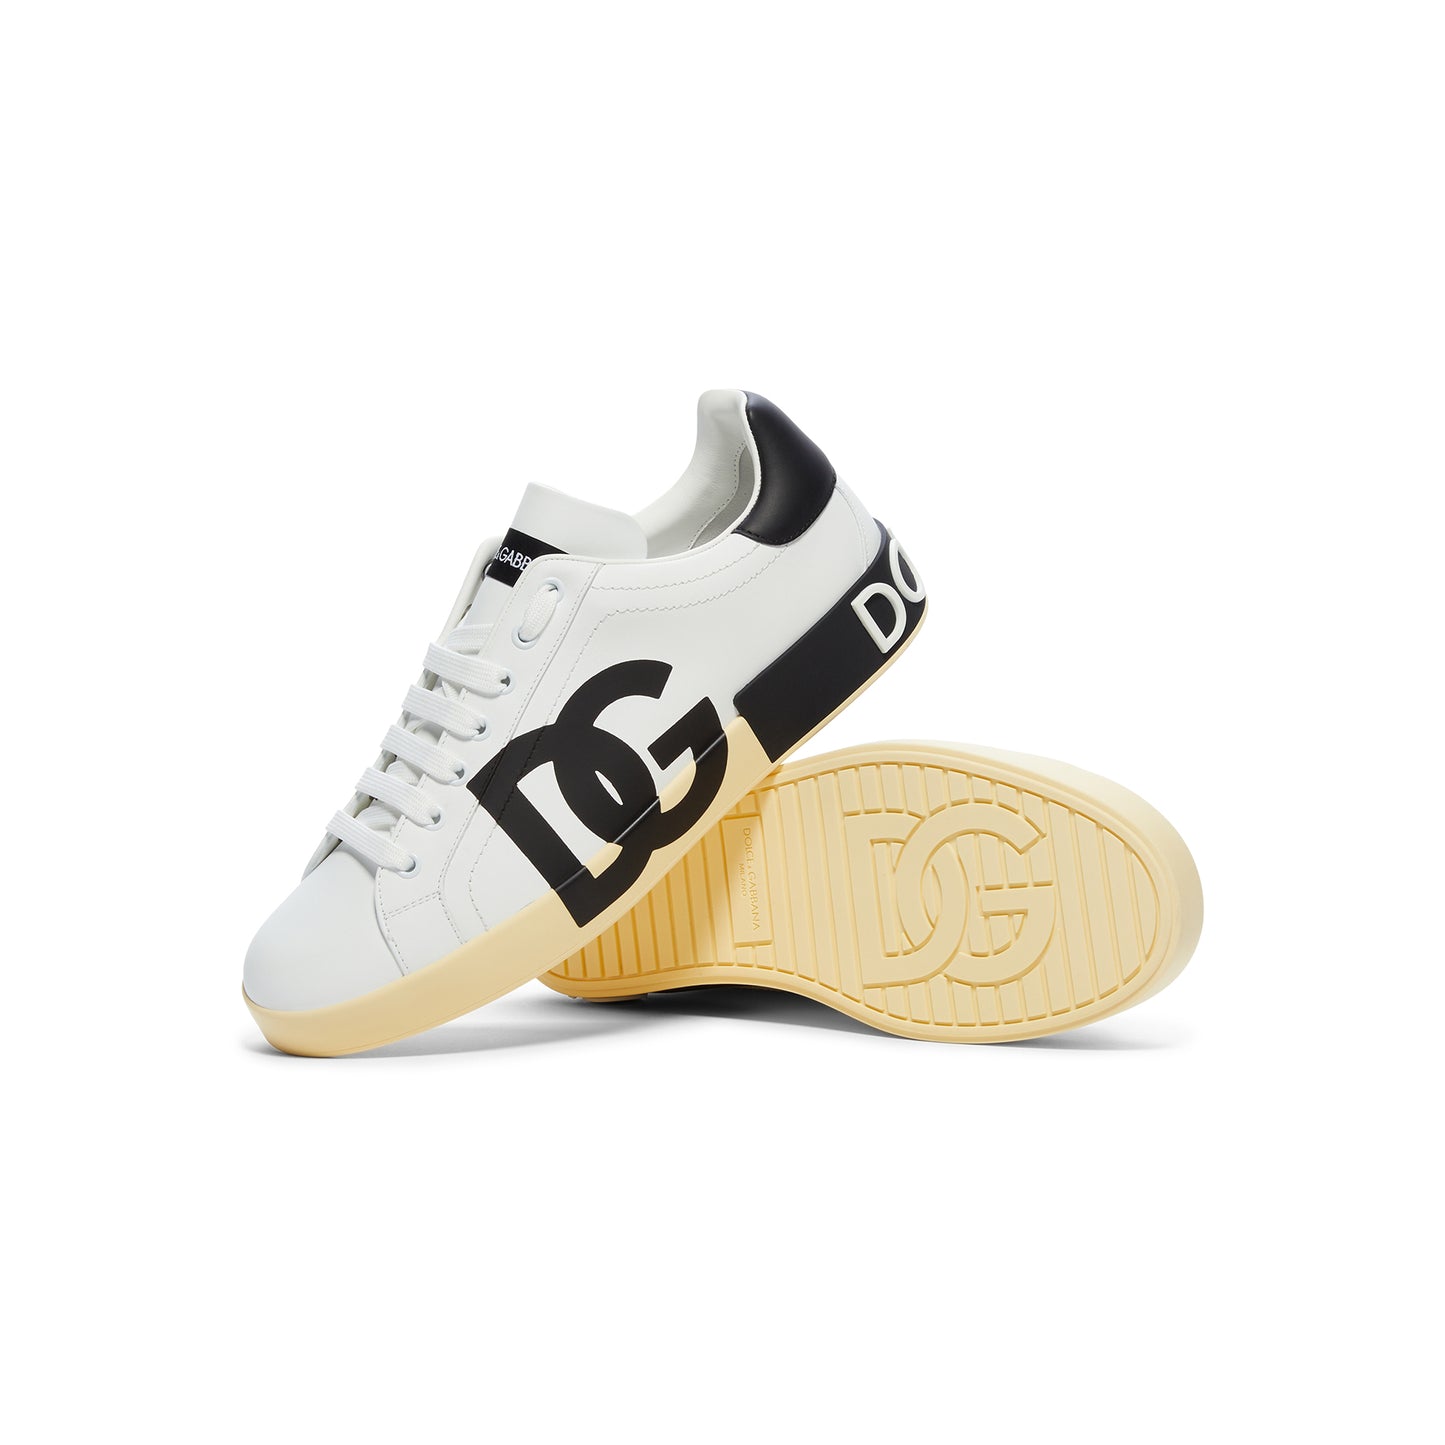 Dolce & Gabbana Low Top Sneakers (White/Black)